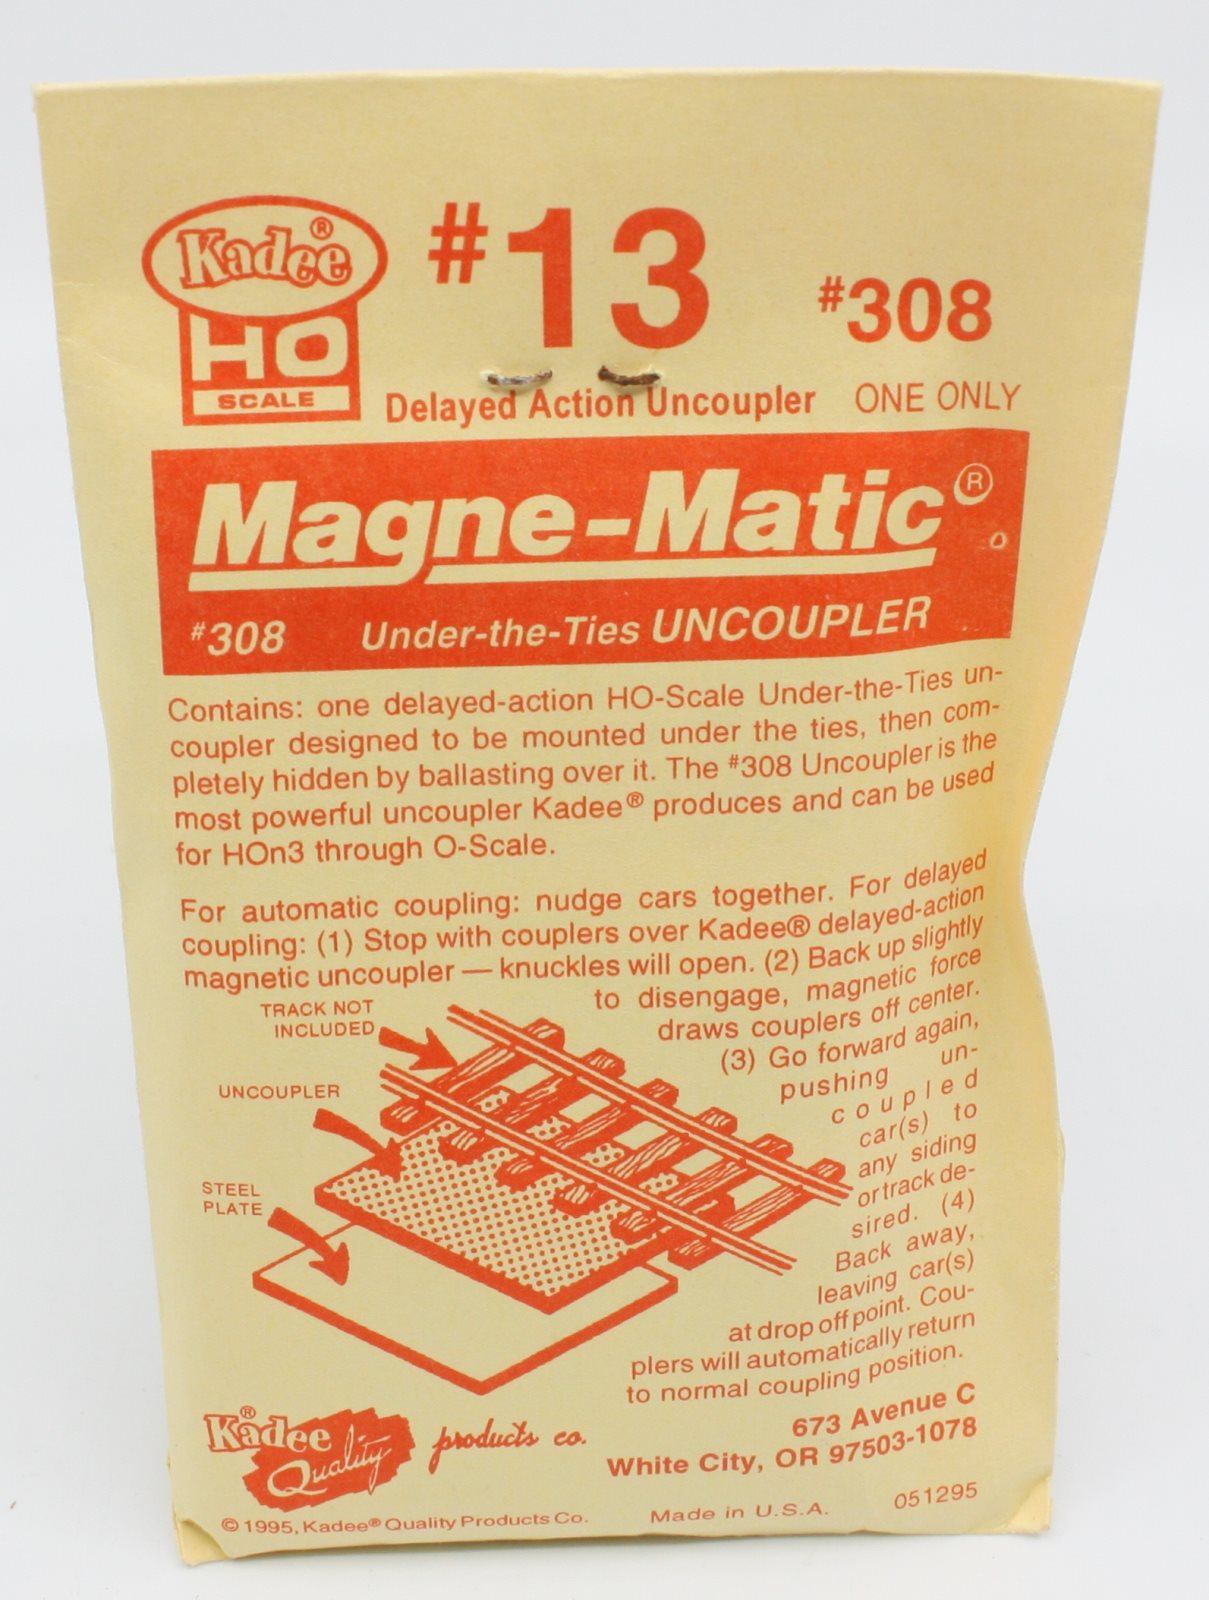 Kadee 13 HO # 308 Mange-Matic Under-the-Ties Uncoupler